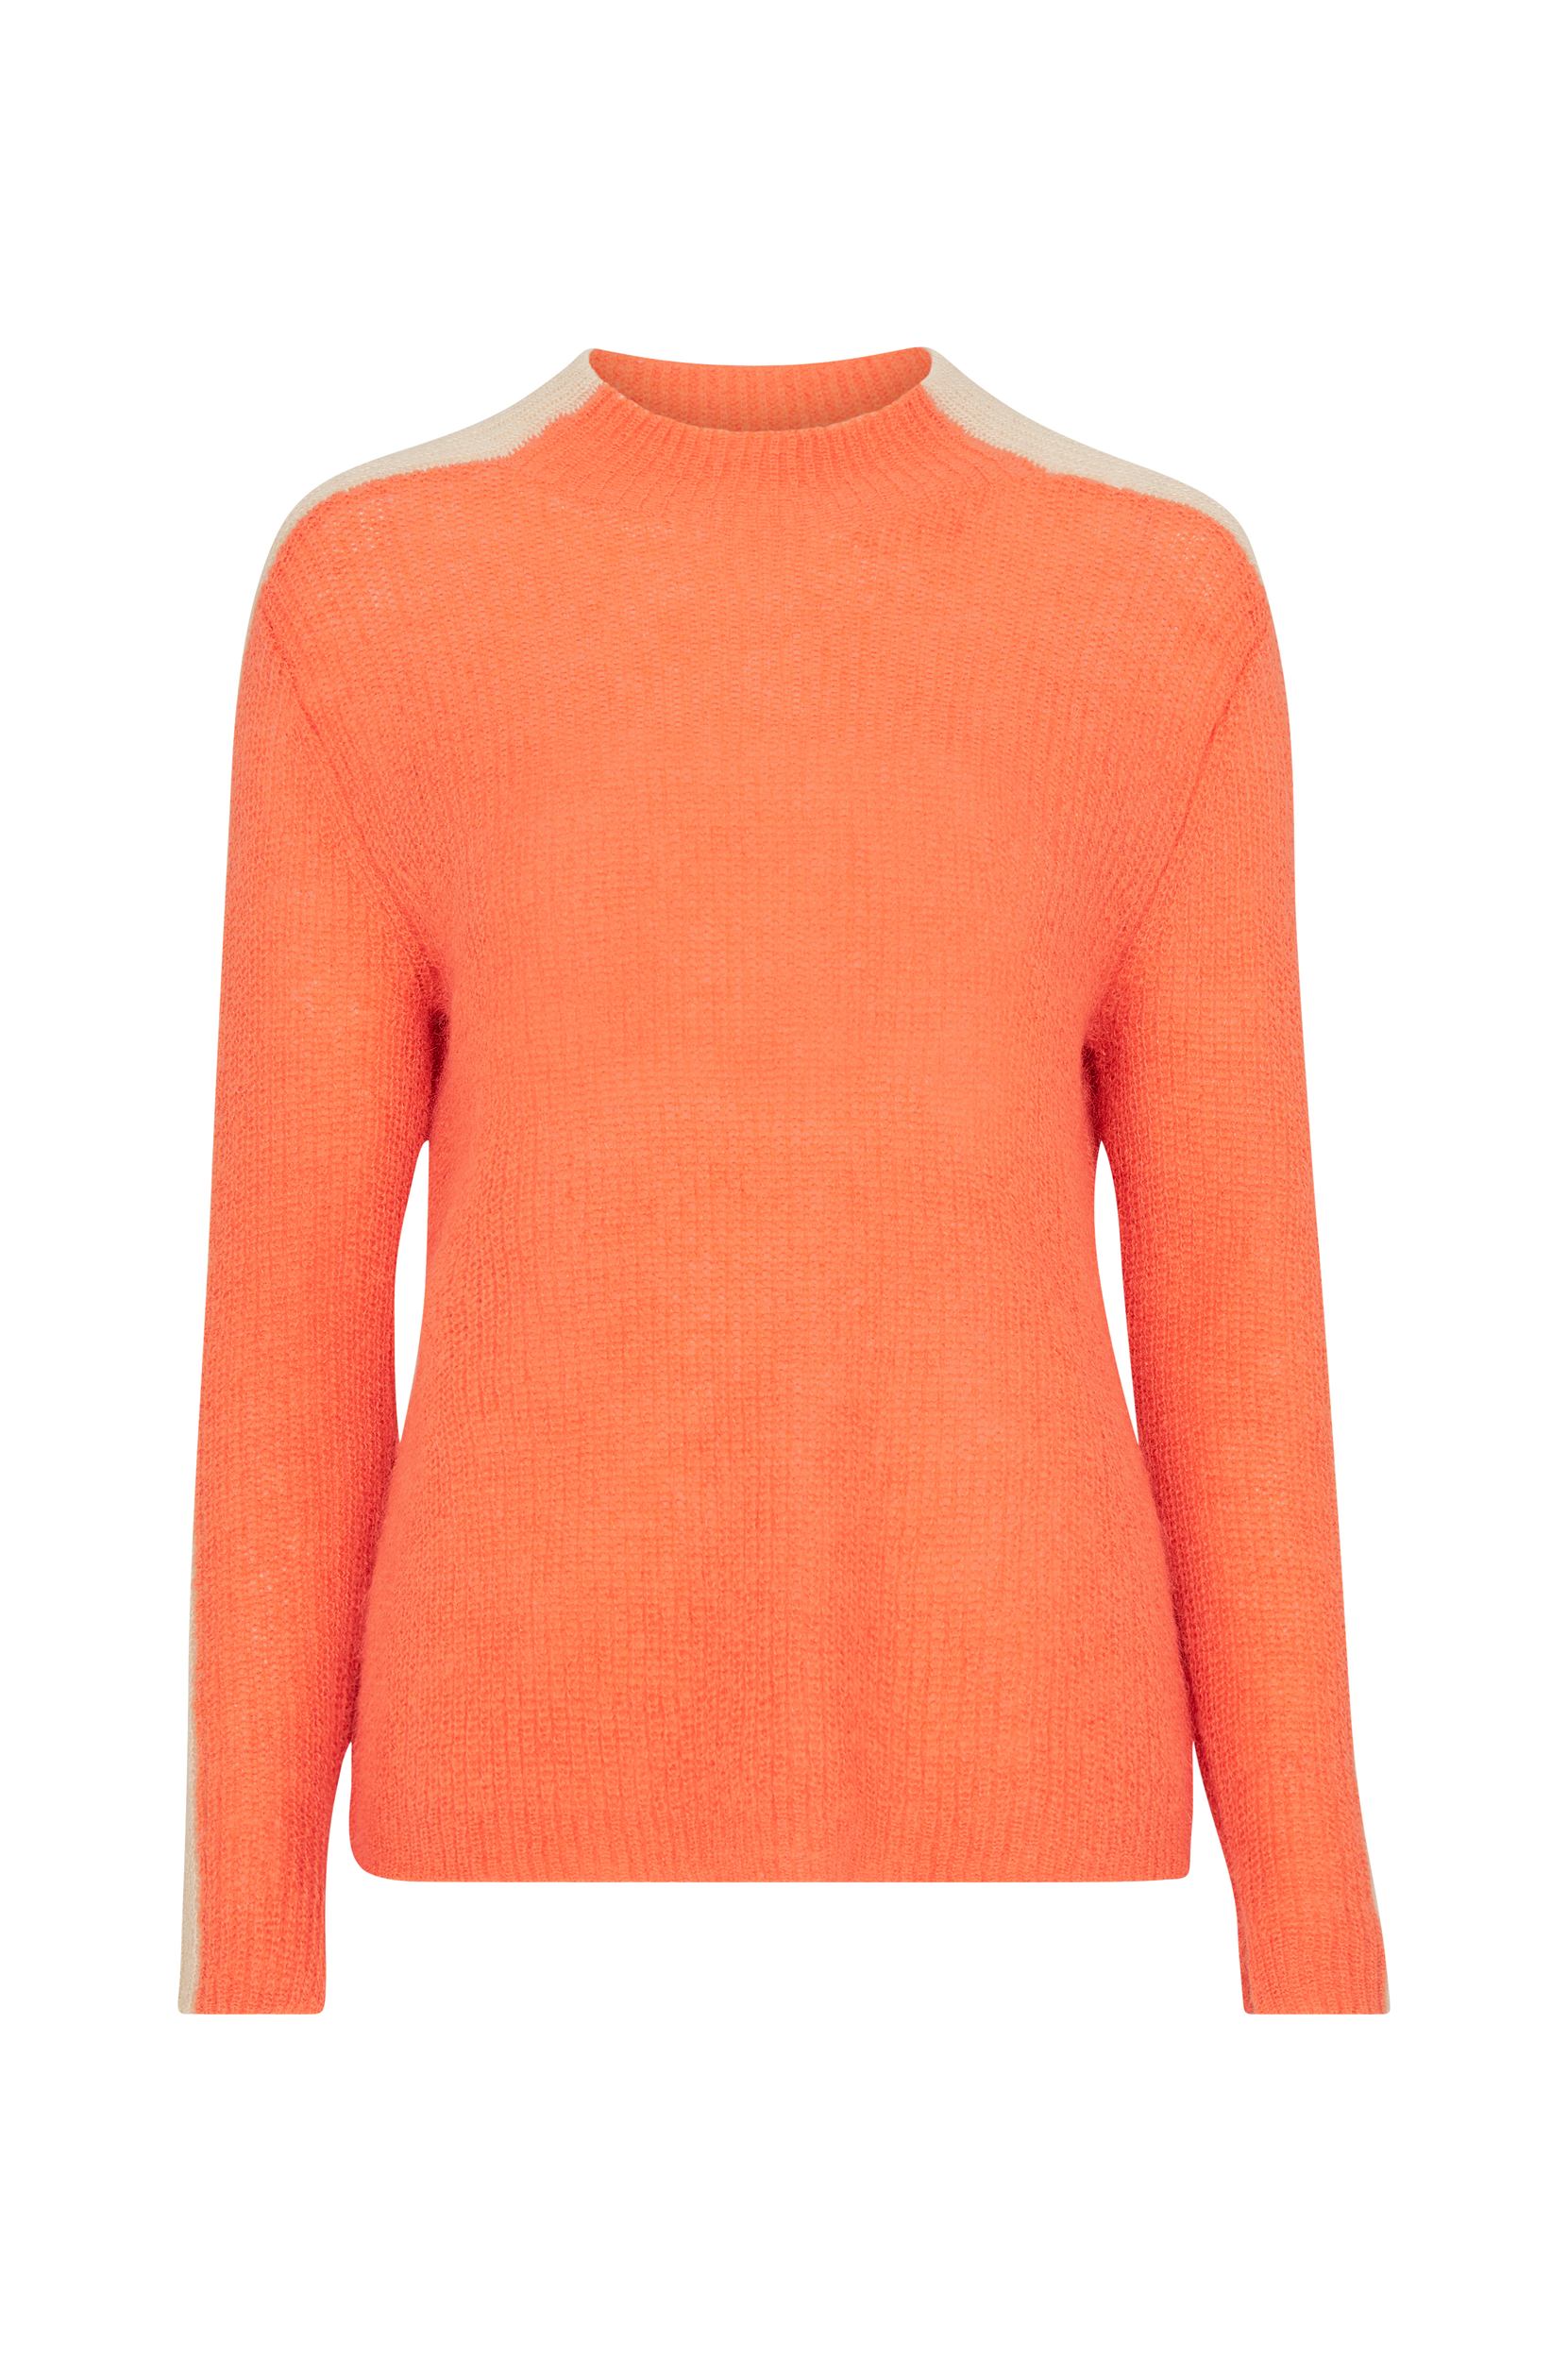 Alpine Knit Sweater pusero, Hunkydory